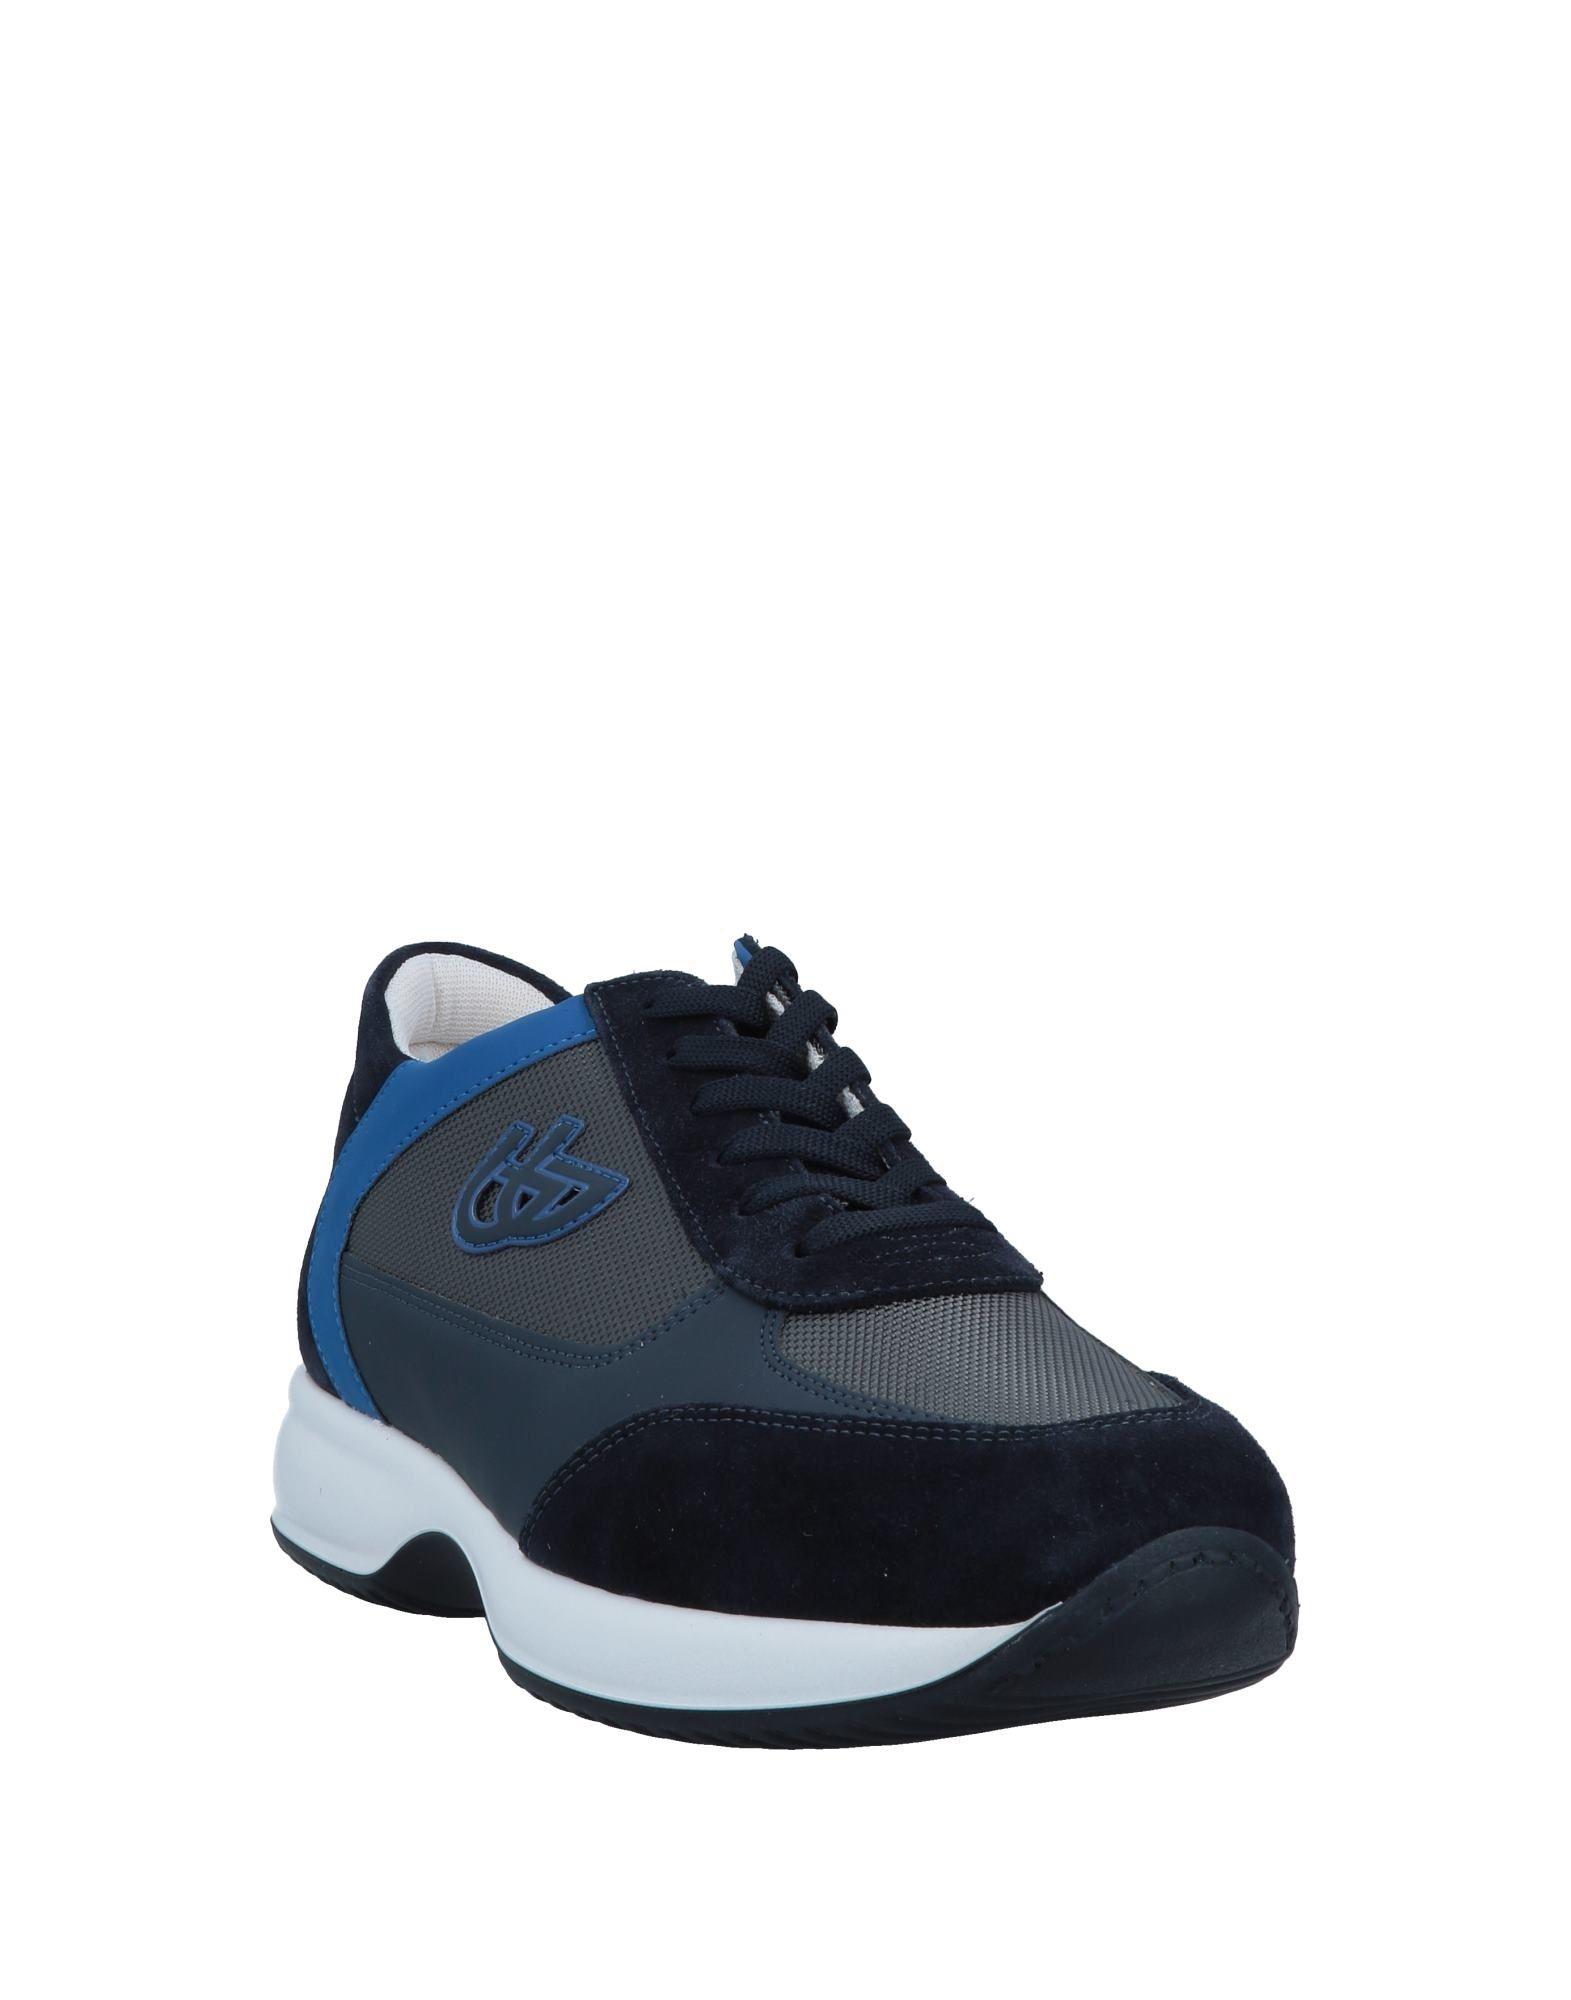 Blu Byblos Leather Low-tops & Sneakers in Dark Blue (Blue) for Men 